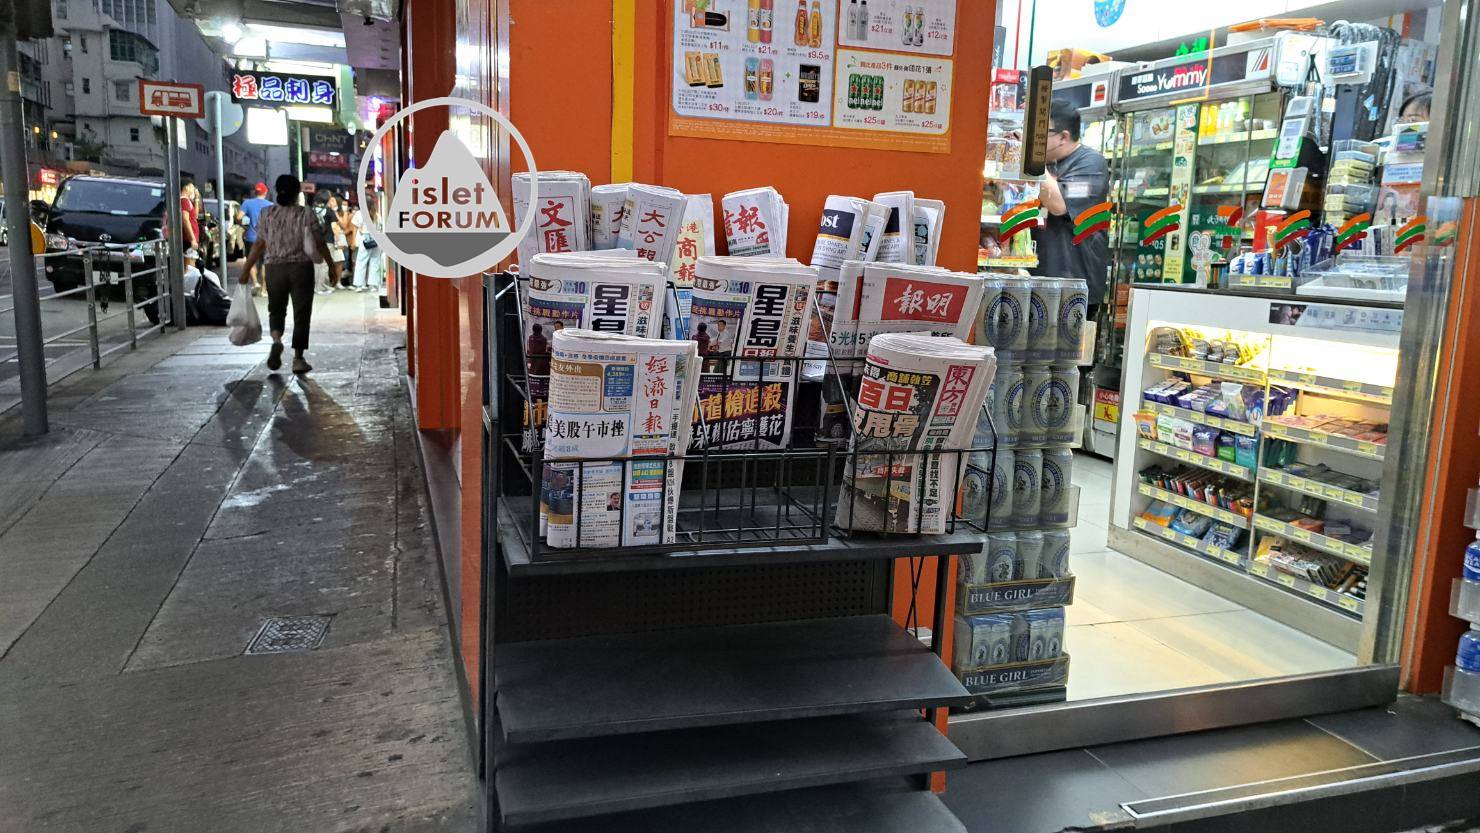 報紙檔newspaper stand.jpg